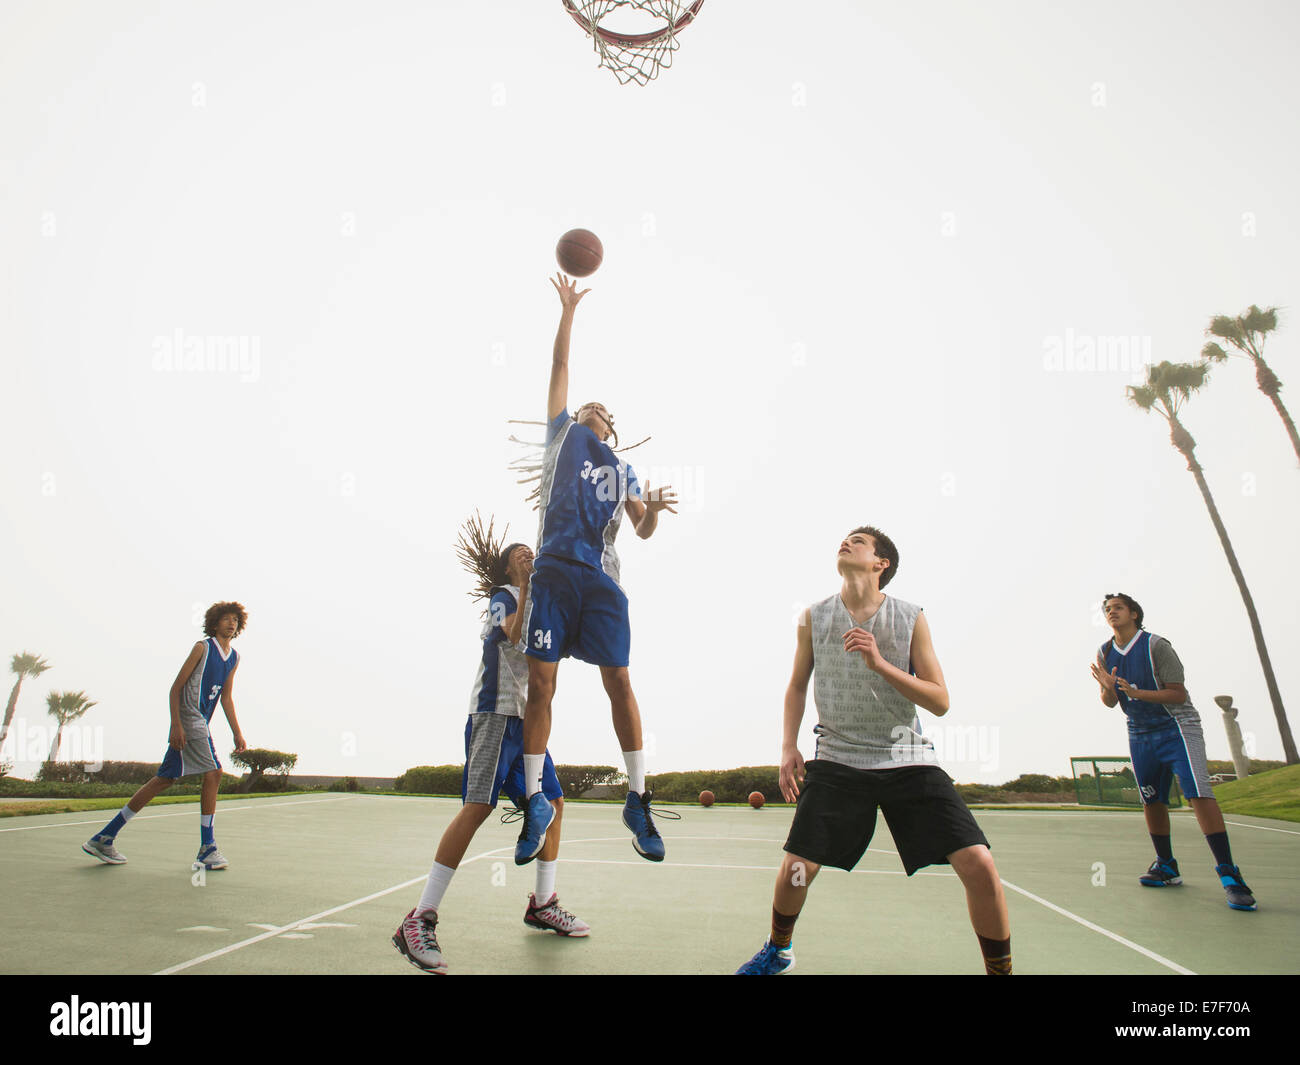 Basketball teams playing on court Stock Photo